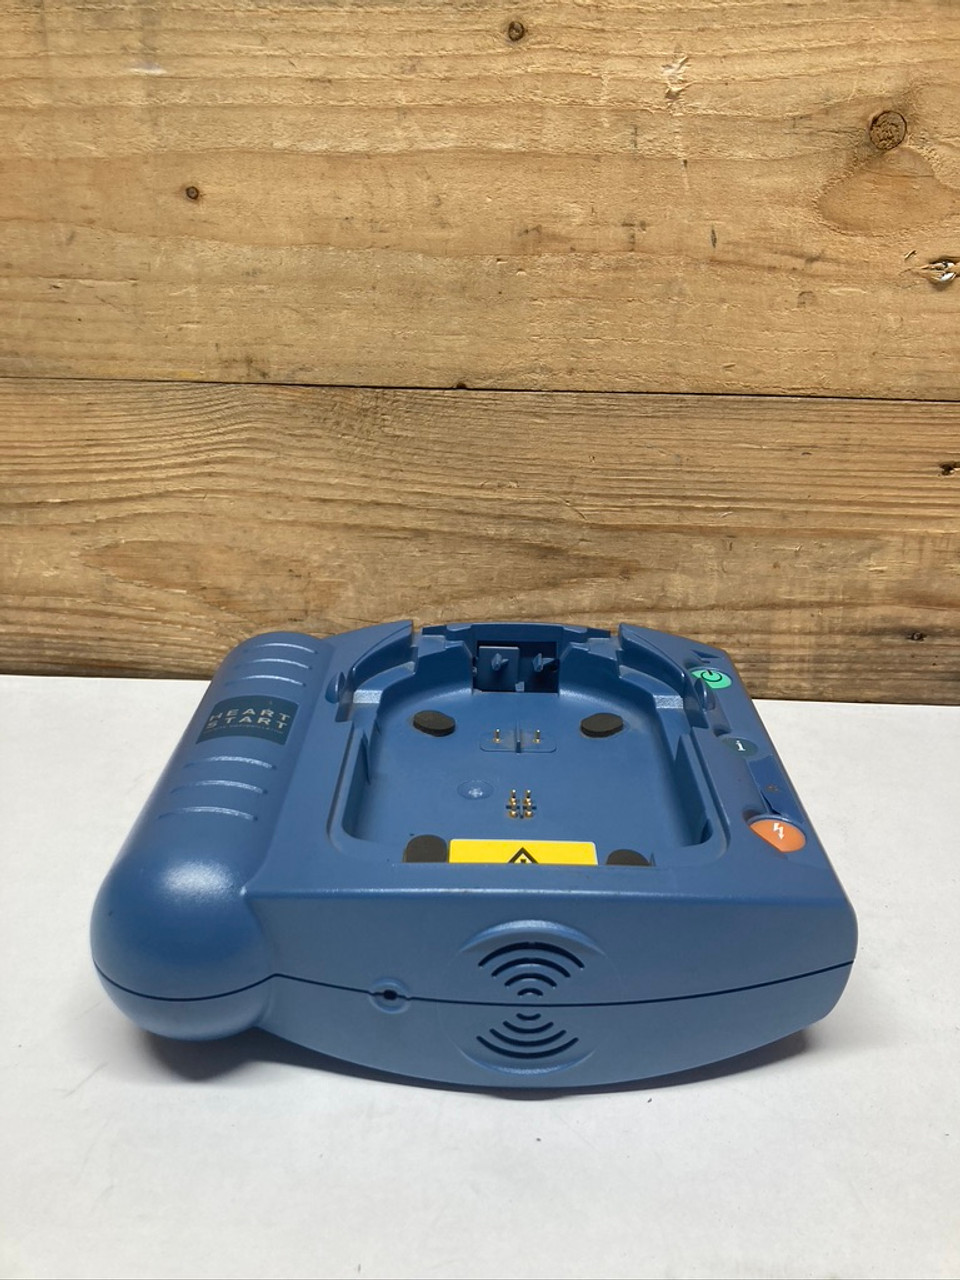 HeartStart Onsite AED Defibrillator M5066A Philips